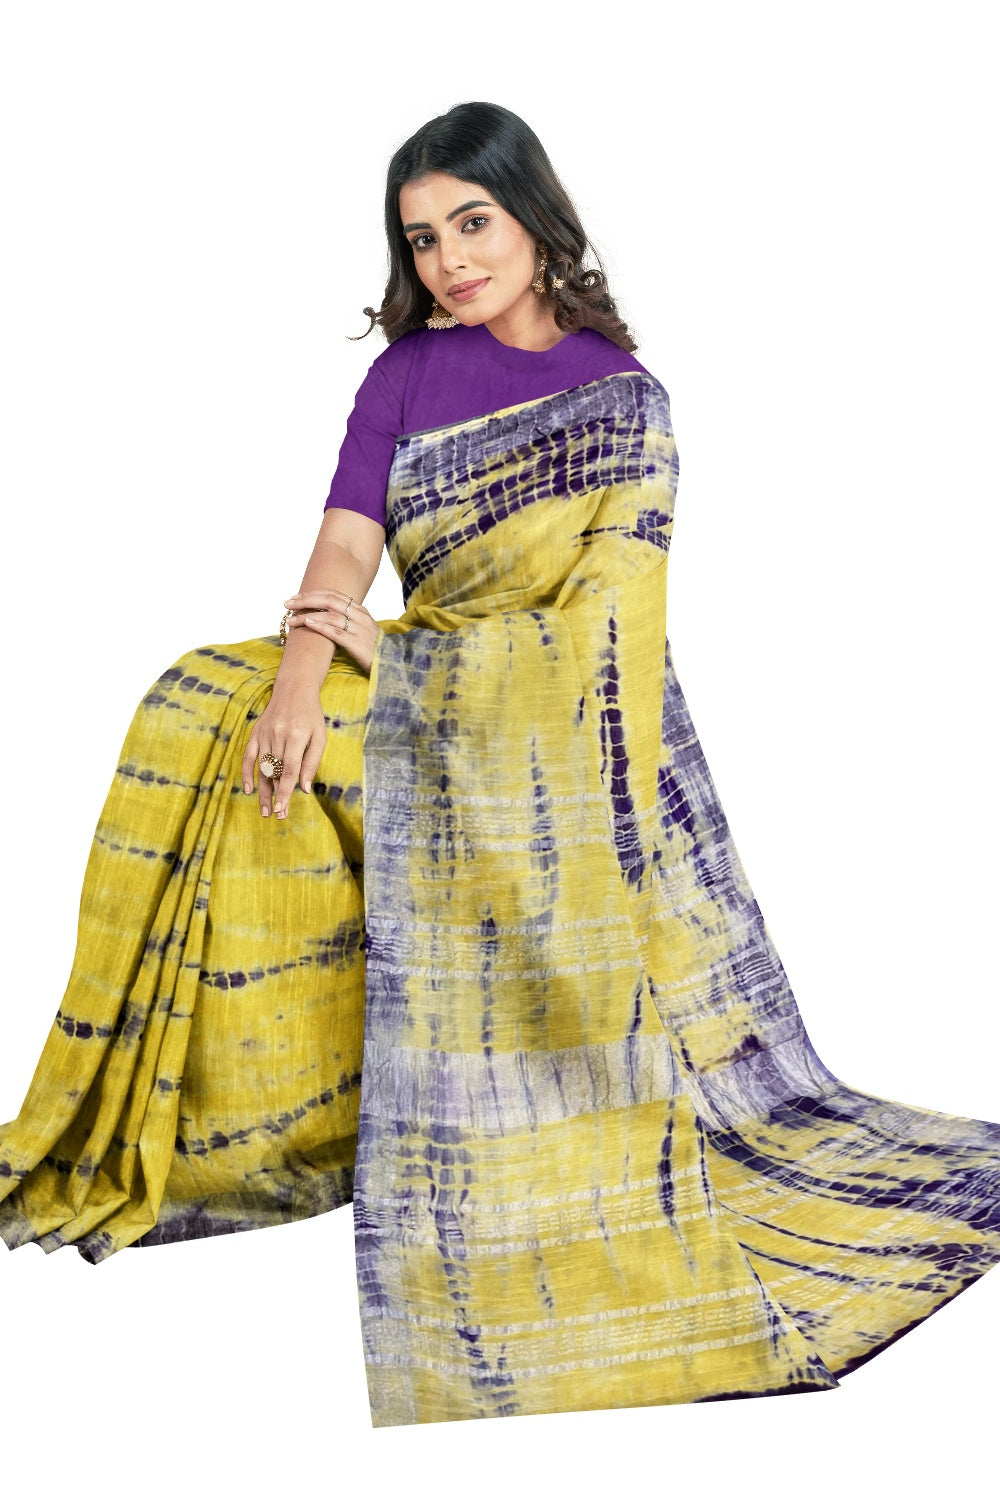 Southloom Linen Yellow and Purple Designer Saree